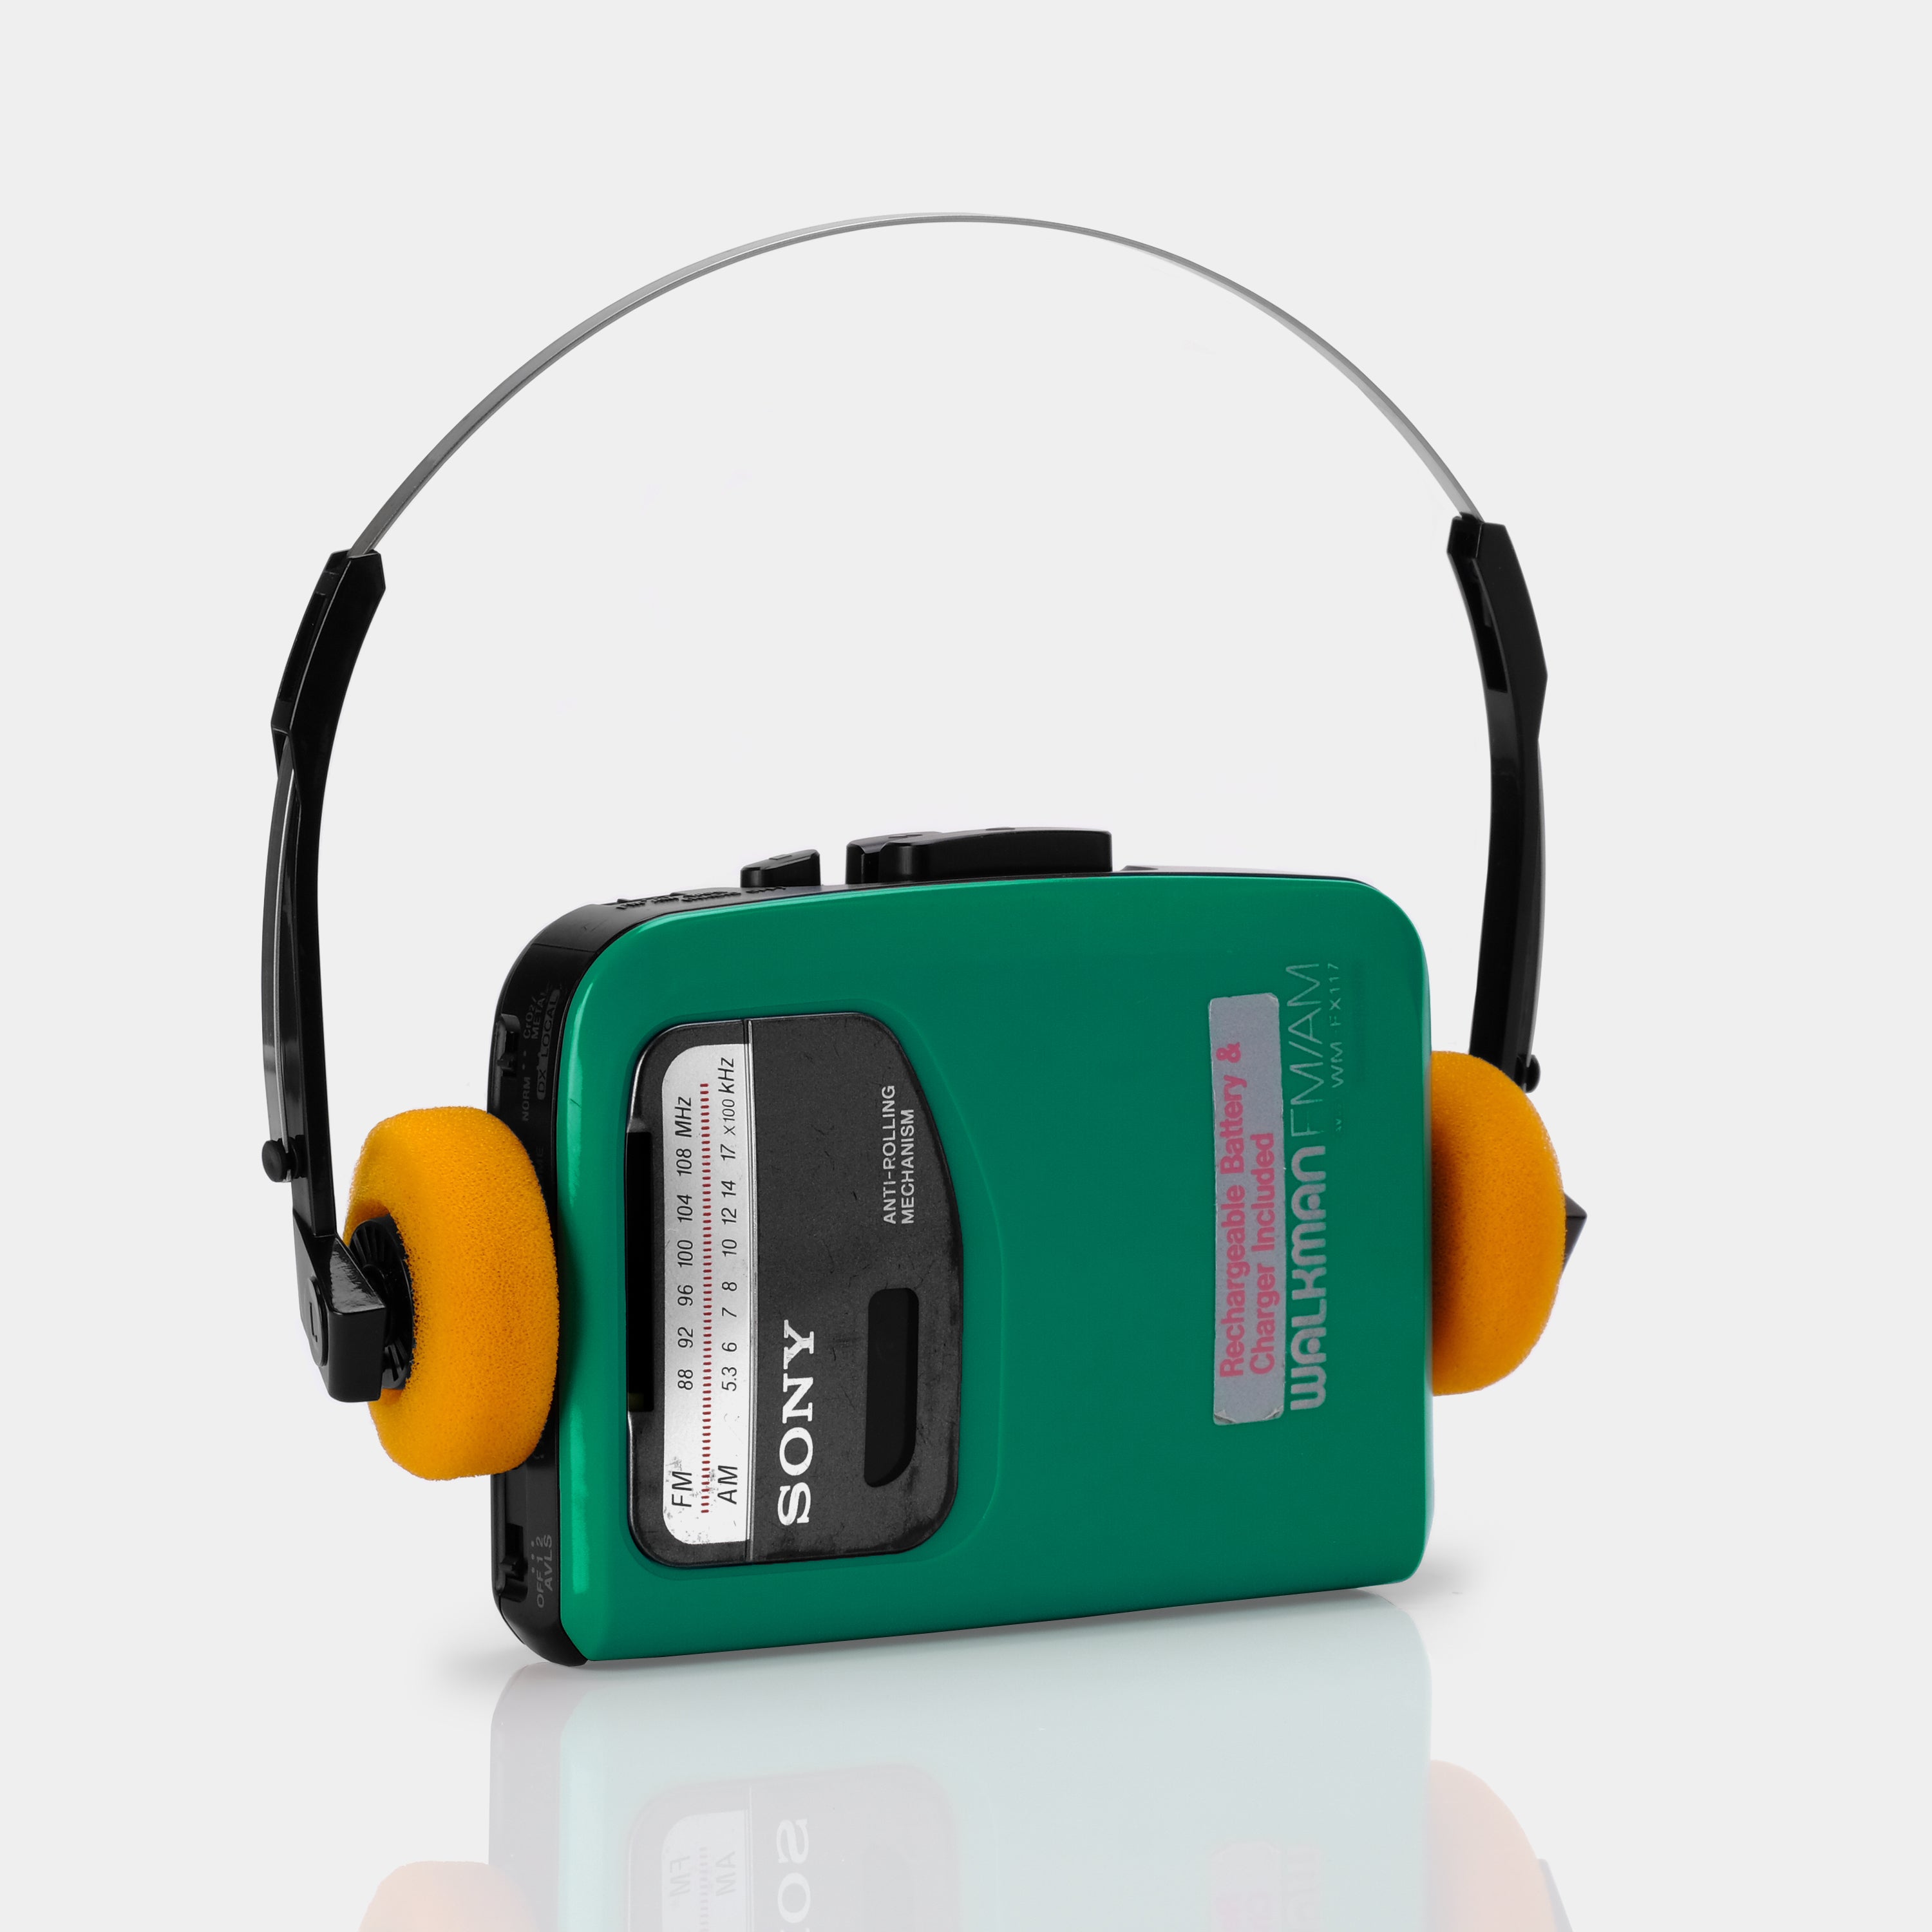 Sony Walkman WM-FX117 AM/FM Green Portable Cassette Player